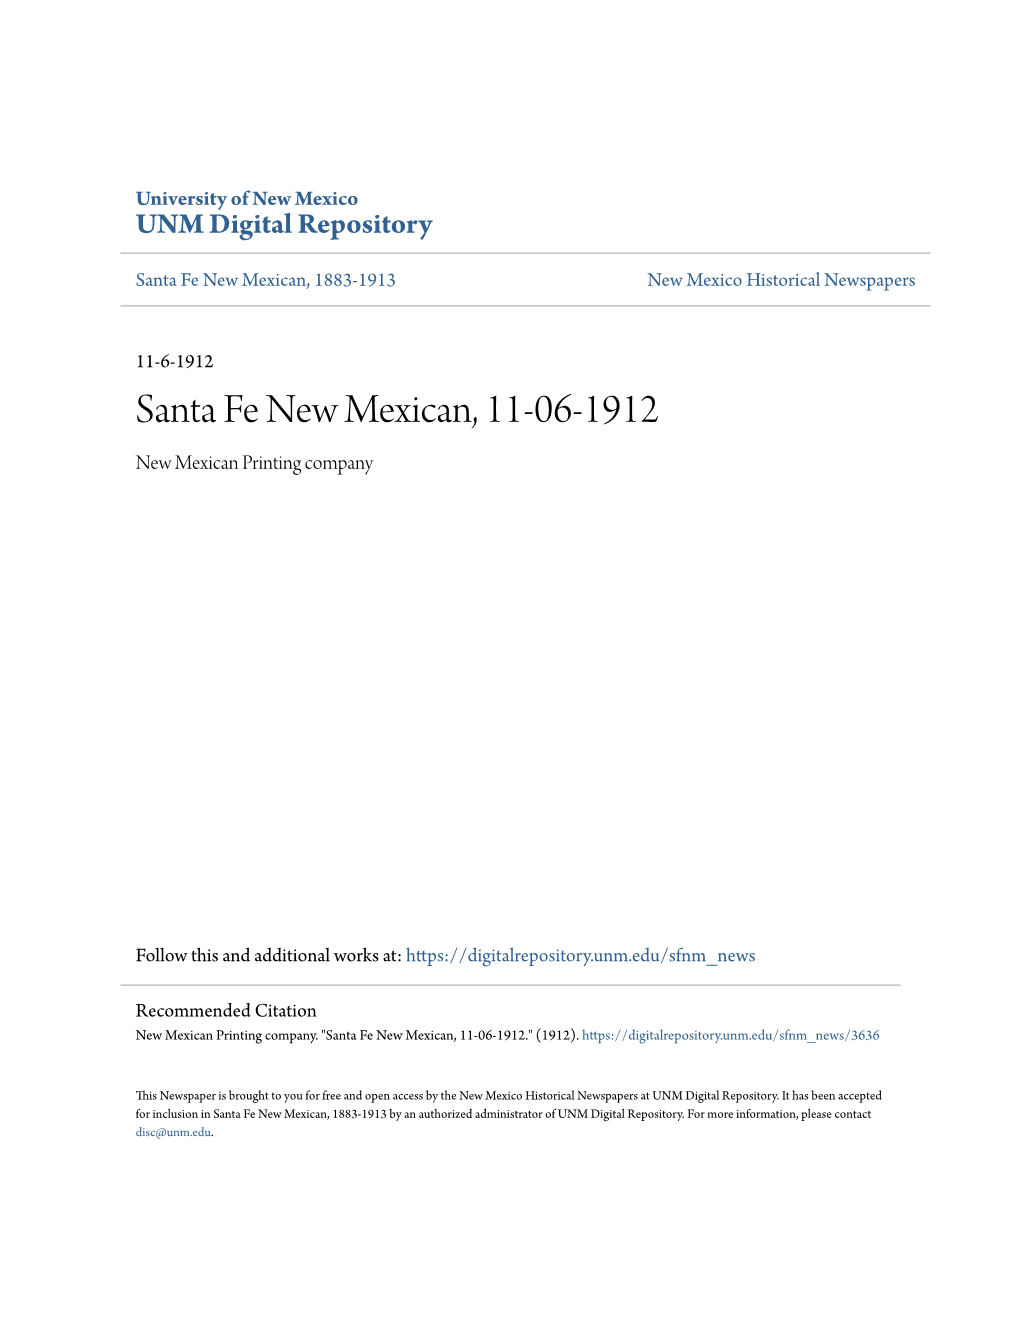 Santa Fe New Mexican, 11-06-1912 New Mexican Printing Company